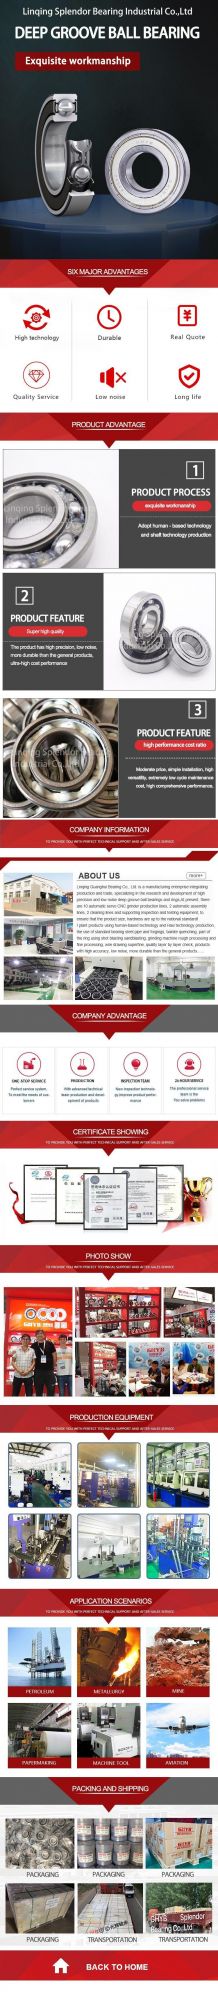 China Factory Distributor Supplier of Deep Groove Ball Bearings for Motors, Compressors, Alternators 6001-2rz/Z2V2